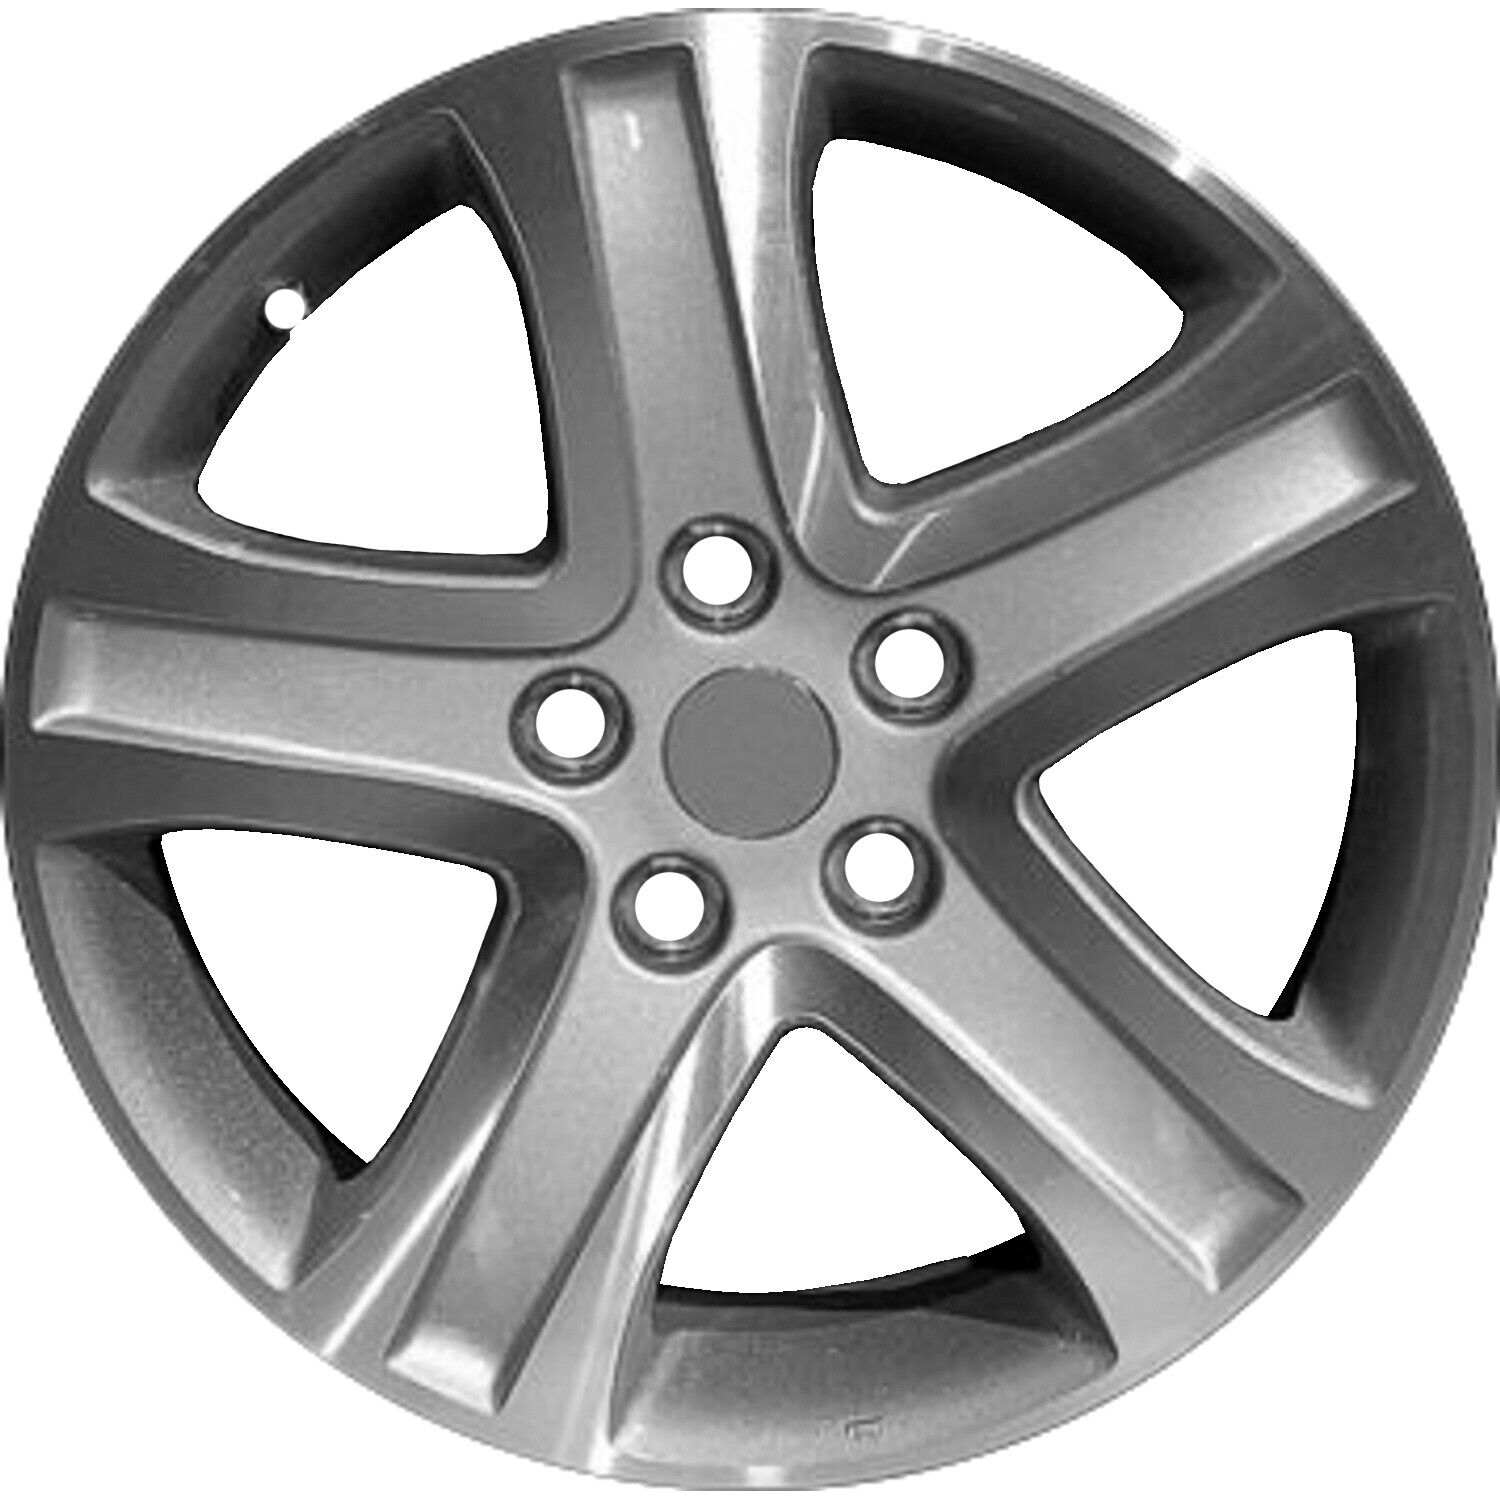 72695 Reconditioned OEM Aluminum Wheel 17x6.5 fits 2006-2009 Suzuki Grand Vitara